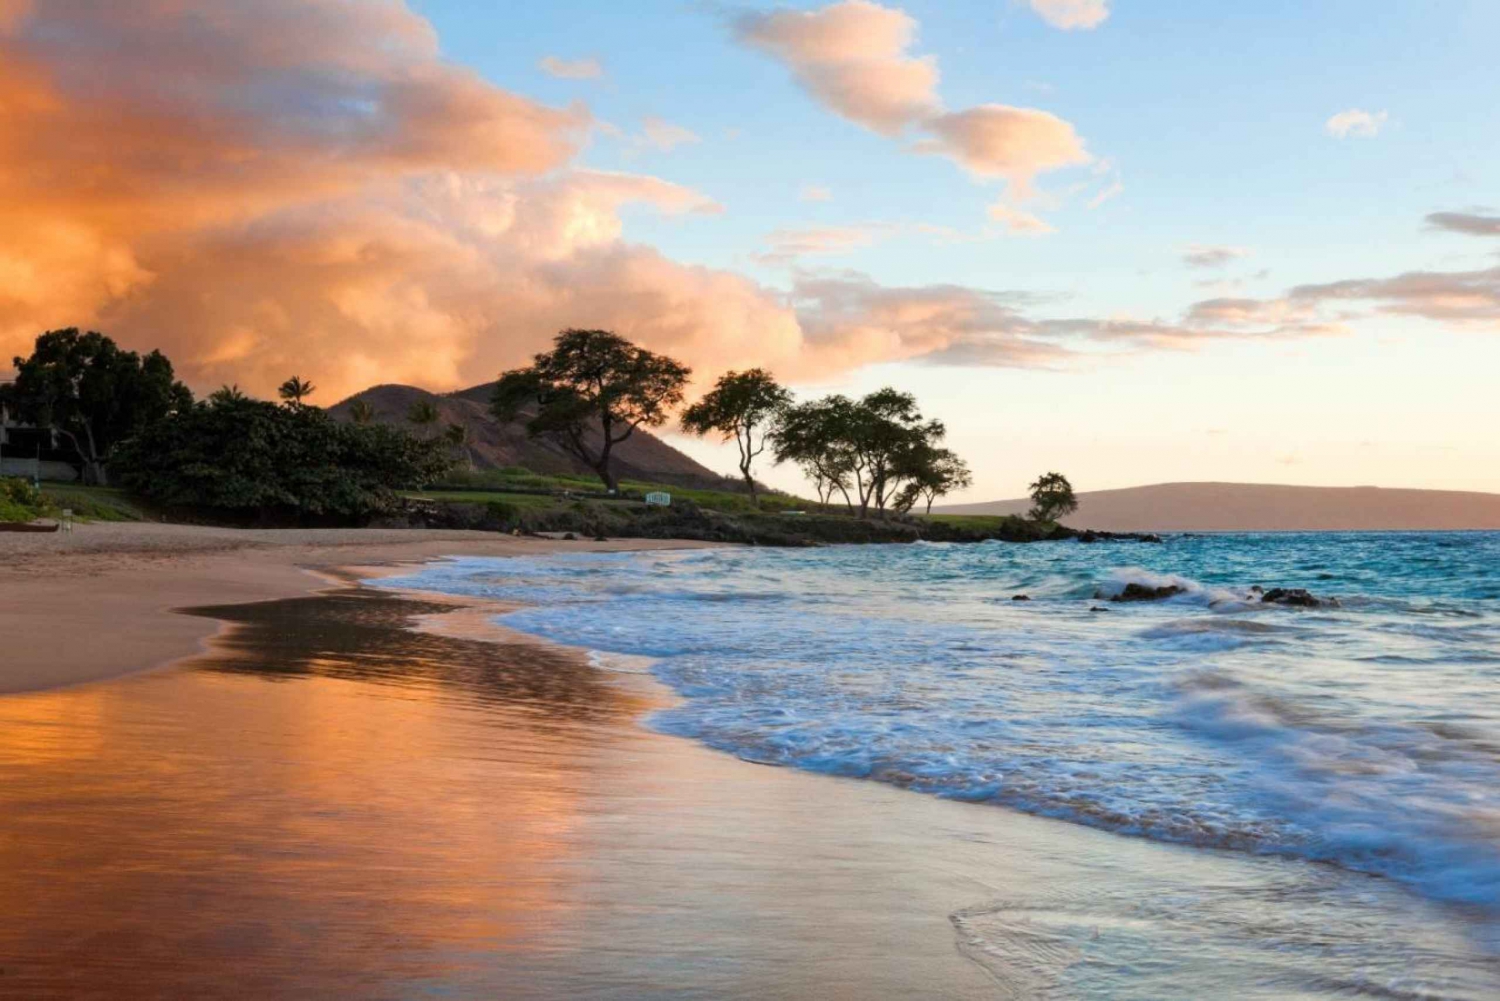 Maui: Road to Hana Self-Guided Audio Tour